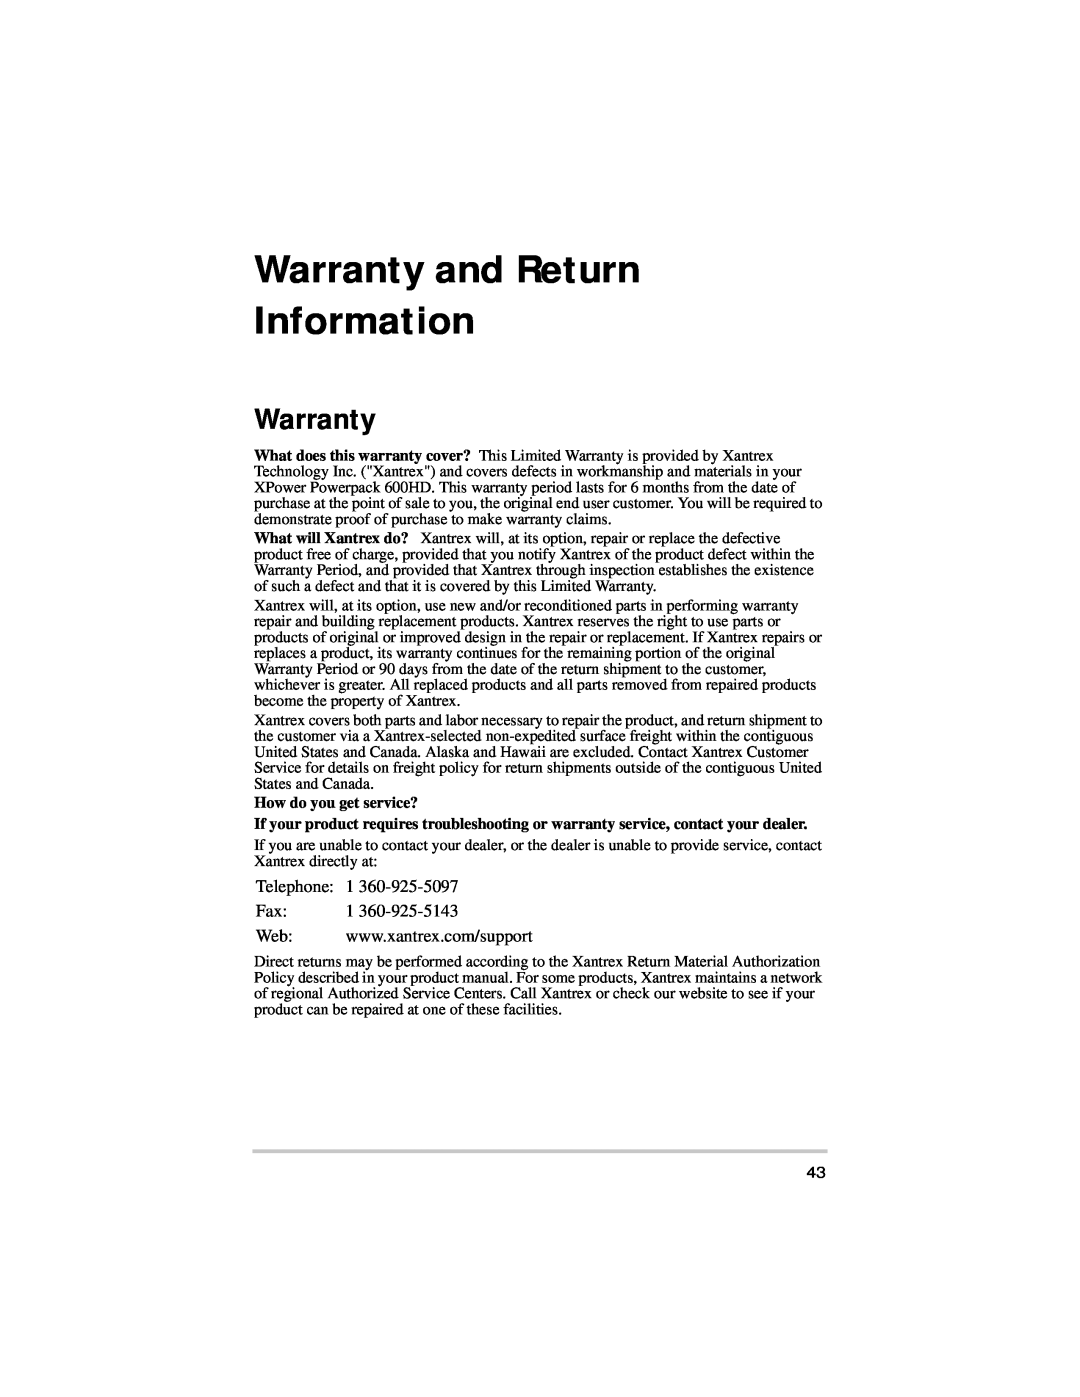 Xantrex Technology 600HD manual Warranty and Return Information 